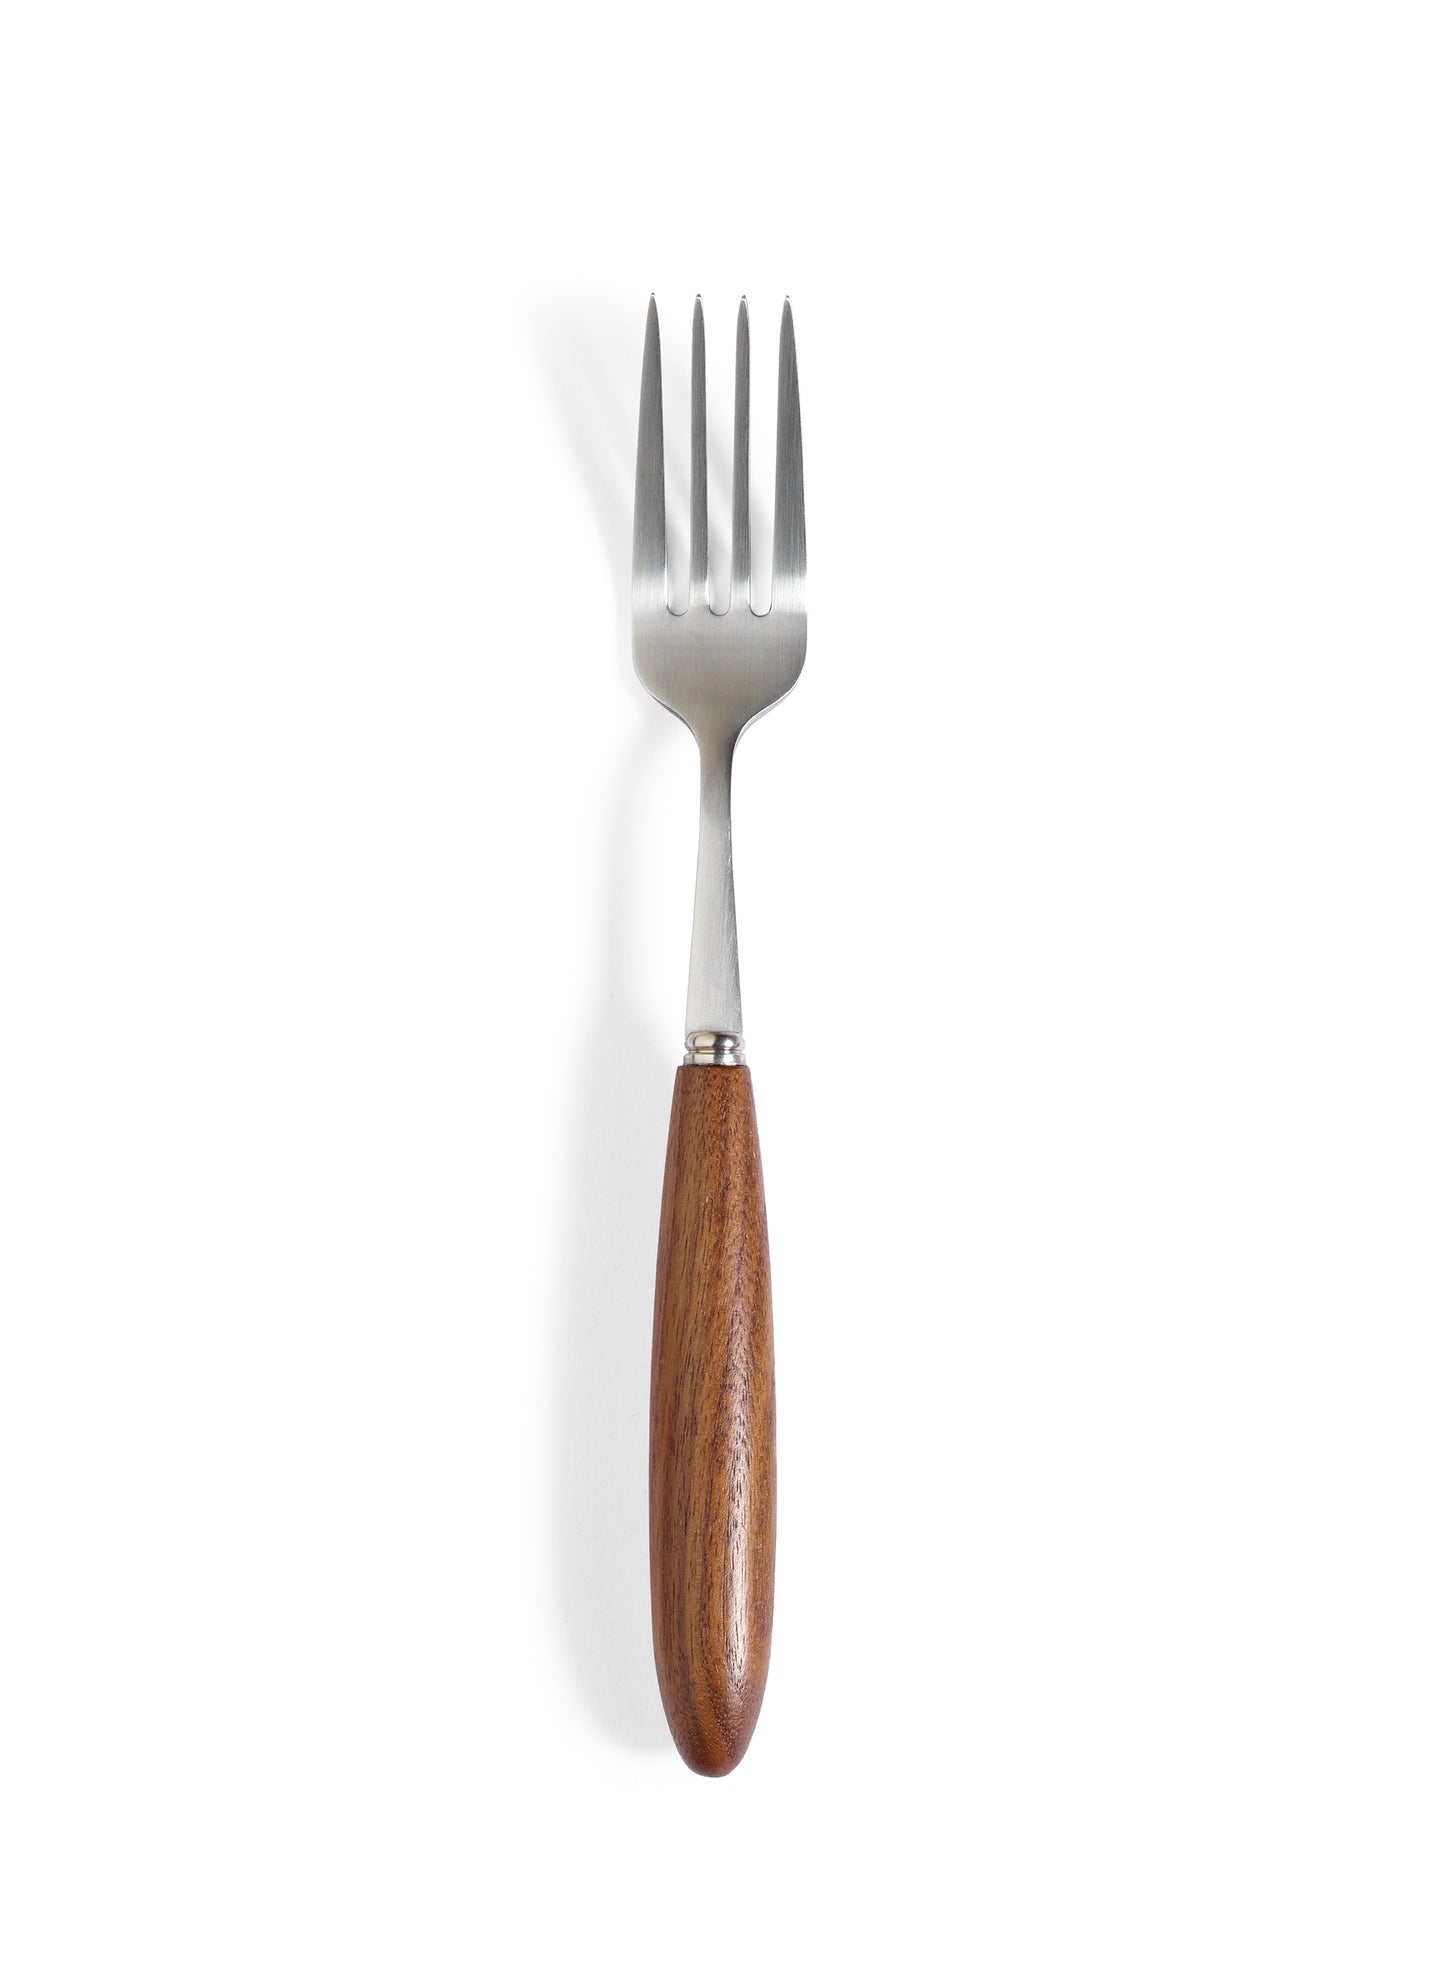 Feast Table Forks (6 pk)